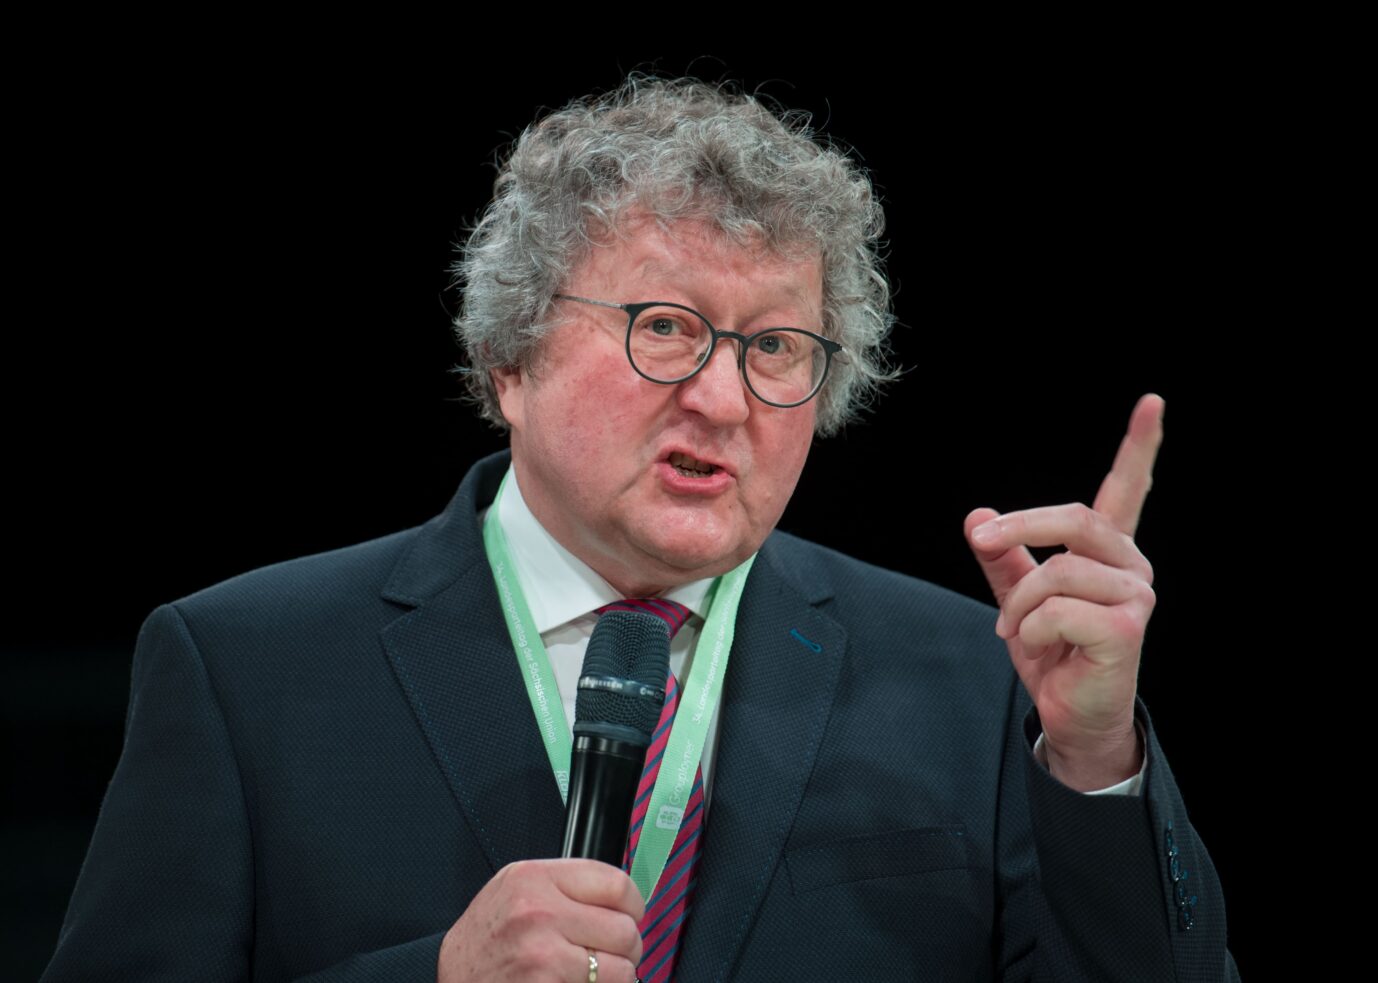 AfD-Hoch: Political scientist Werner J. Patzelt makes serious allegations against the CDU.